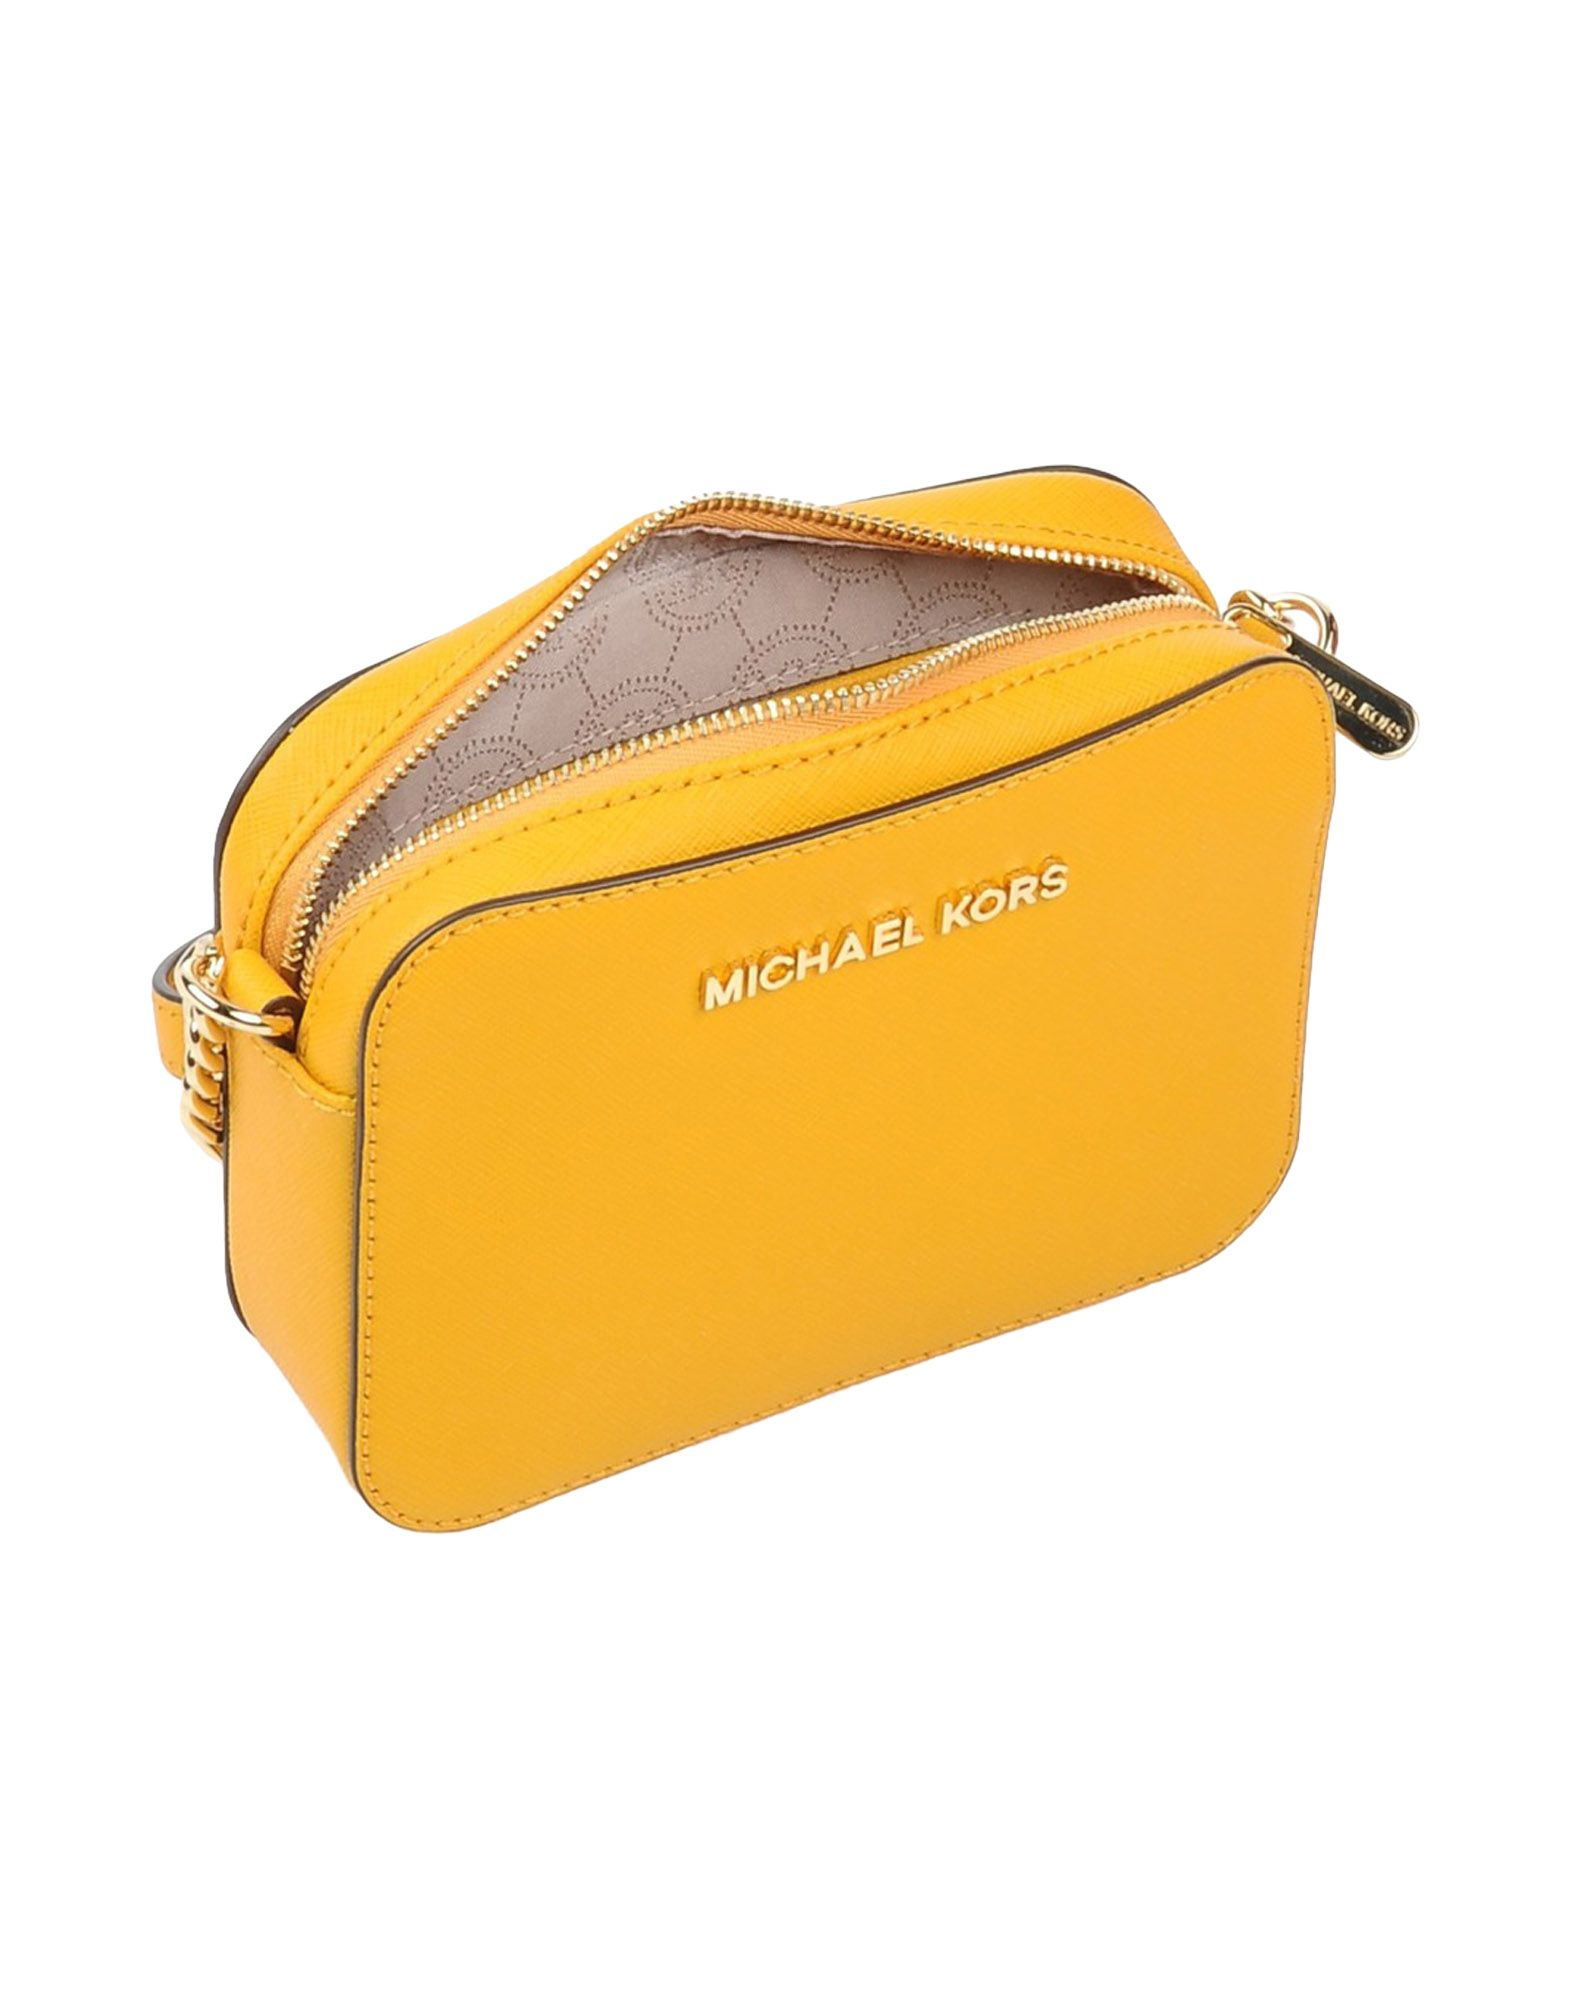 mustard color michael kors bag large retail Save 54 available   wwwhumumssedubo